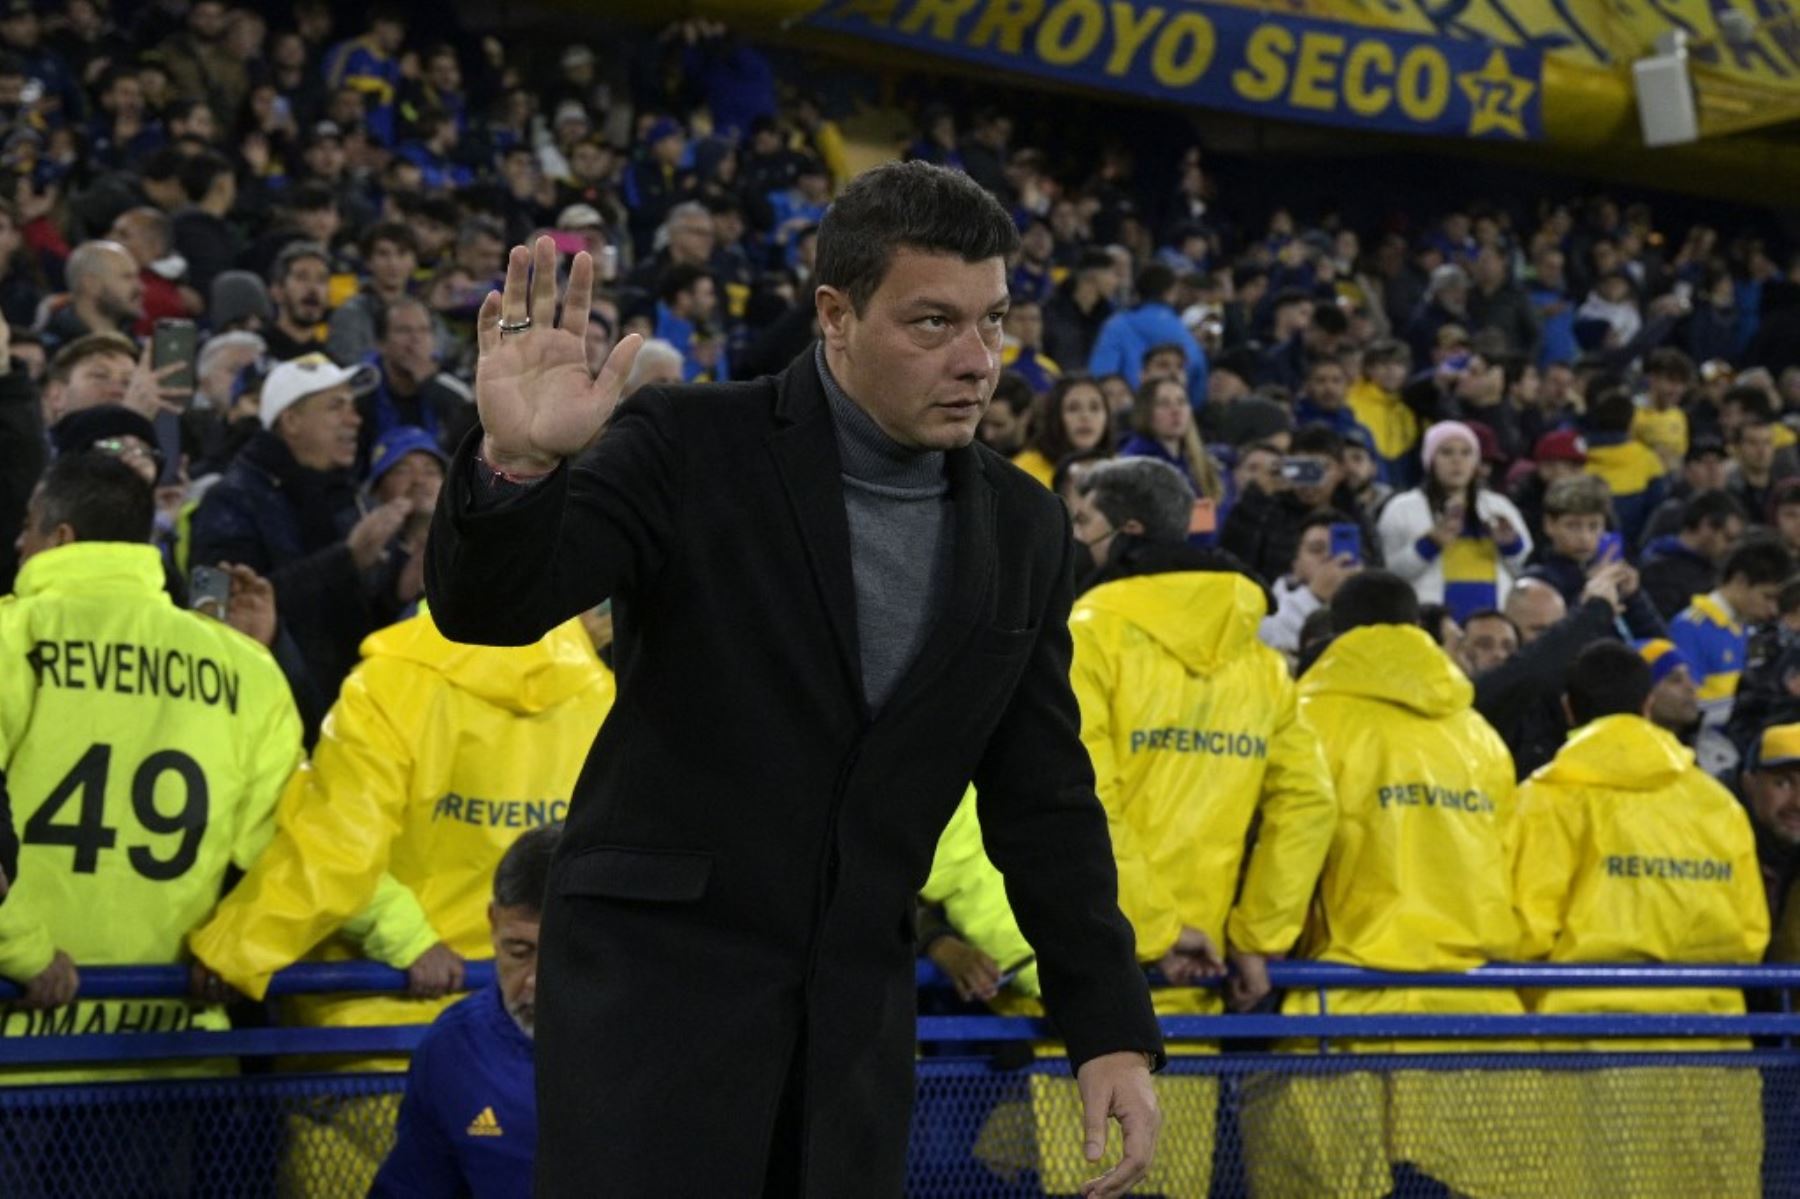 Sebastián Battaglia dejó de ser técnico del Boca Juniors tras ser eliminado en los octavos de final de la Copa Libertadores por el Corinthians